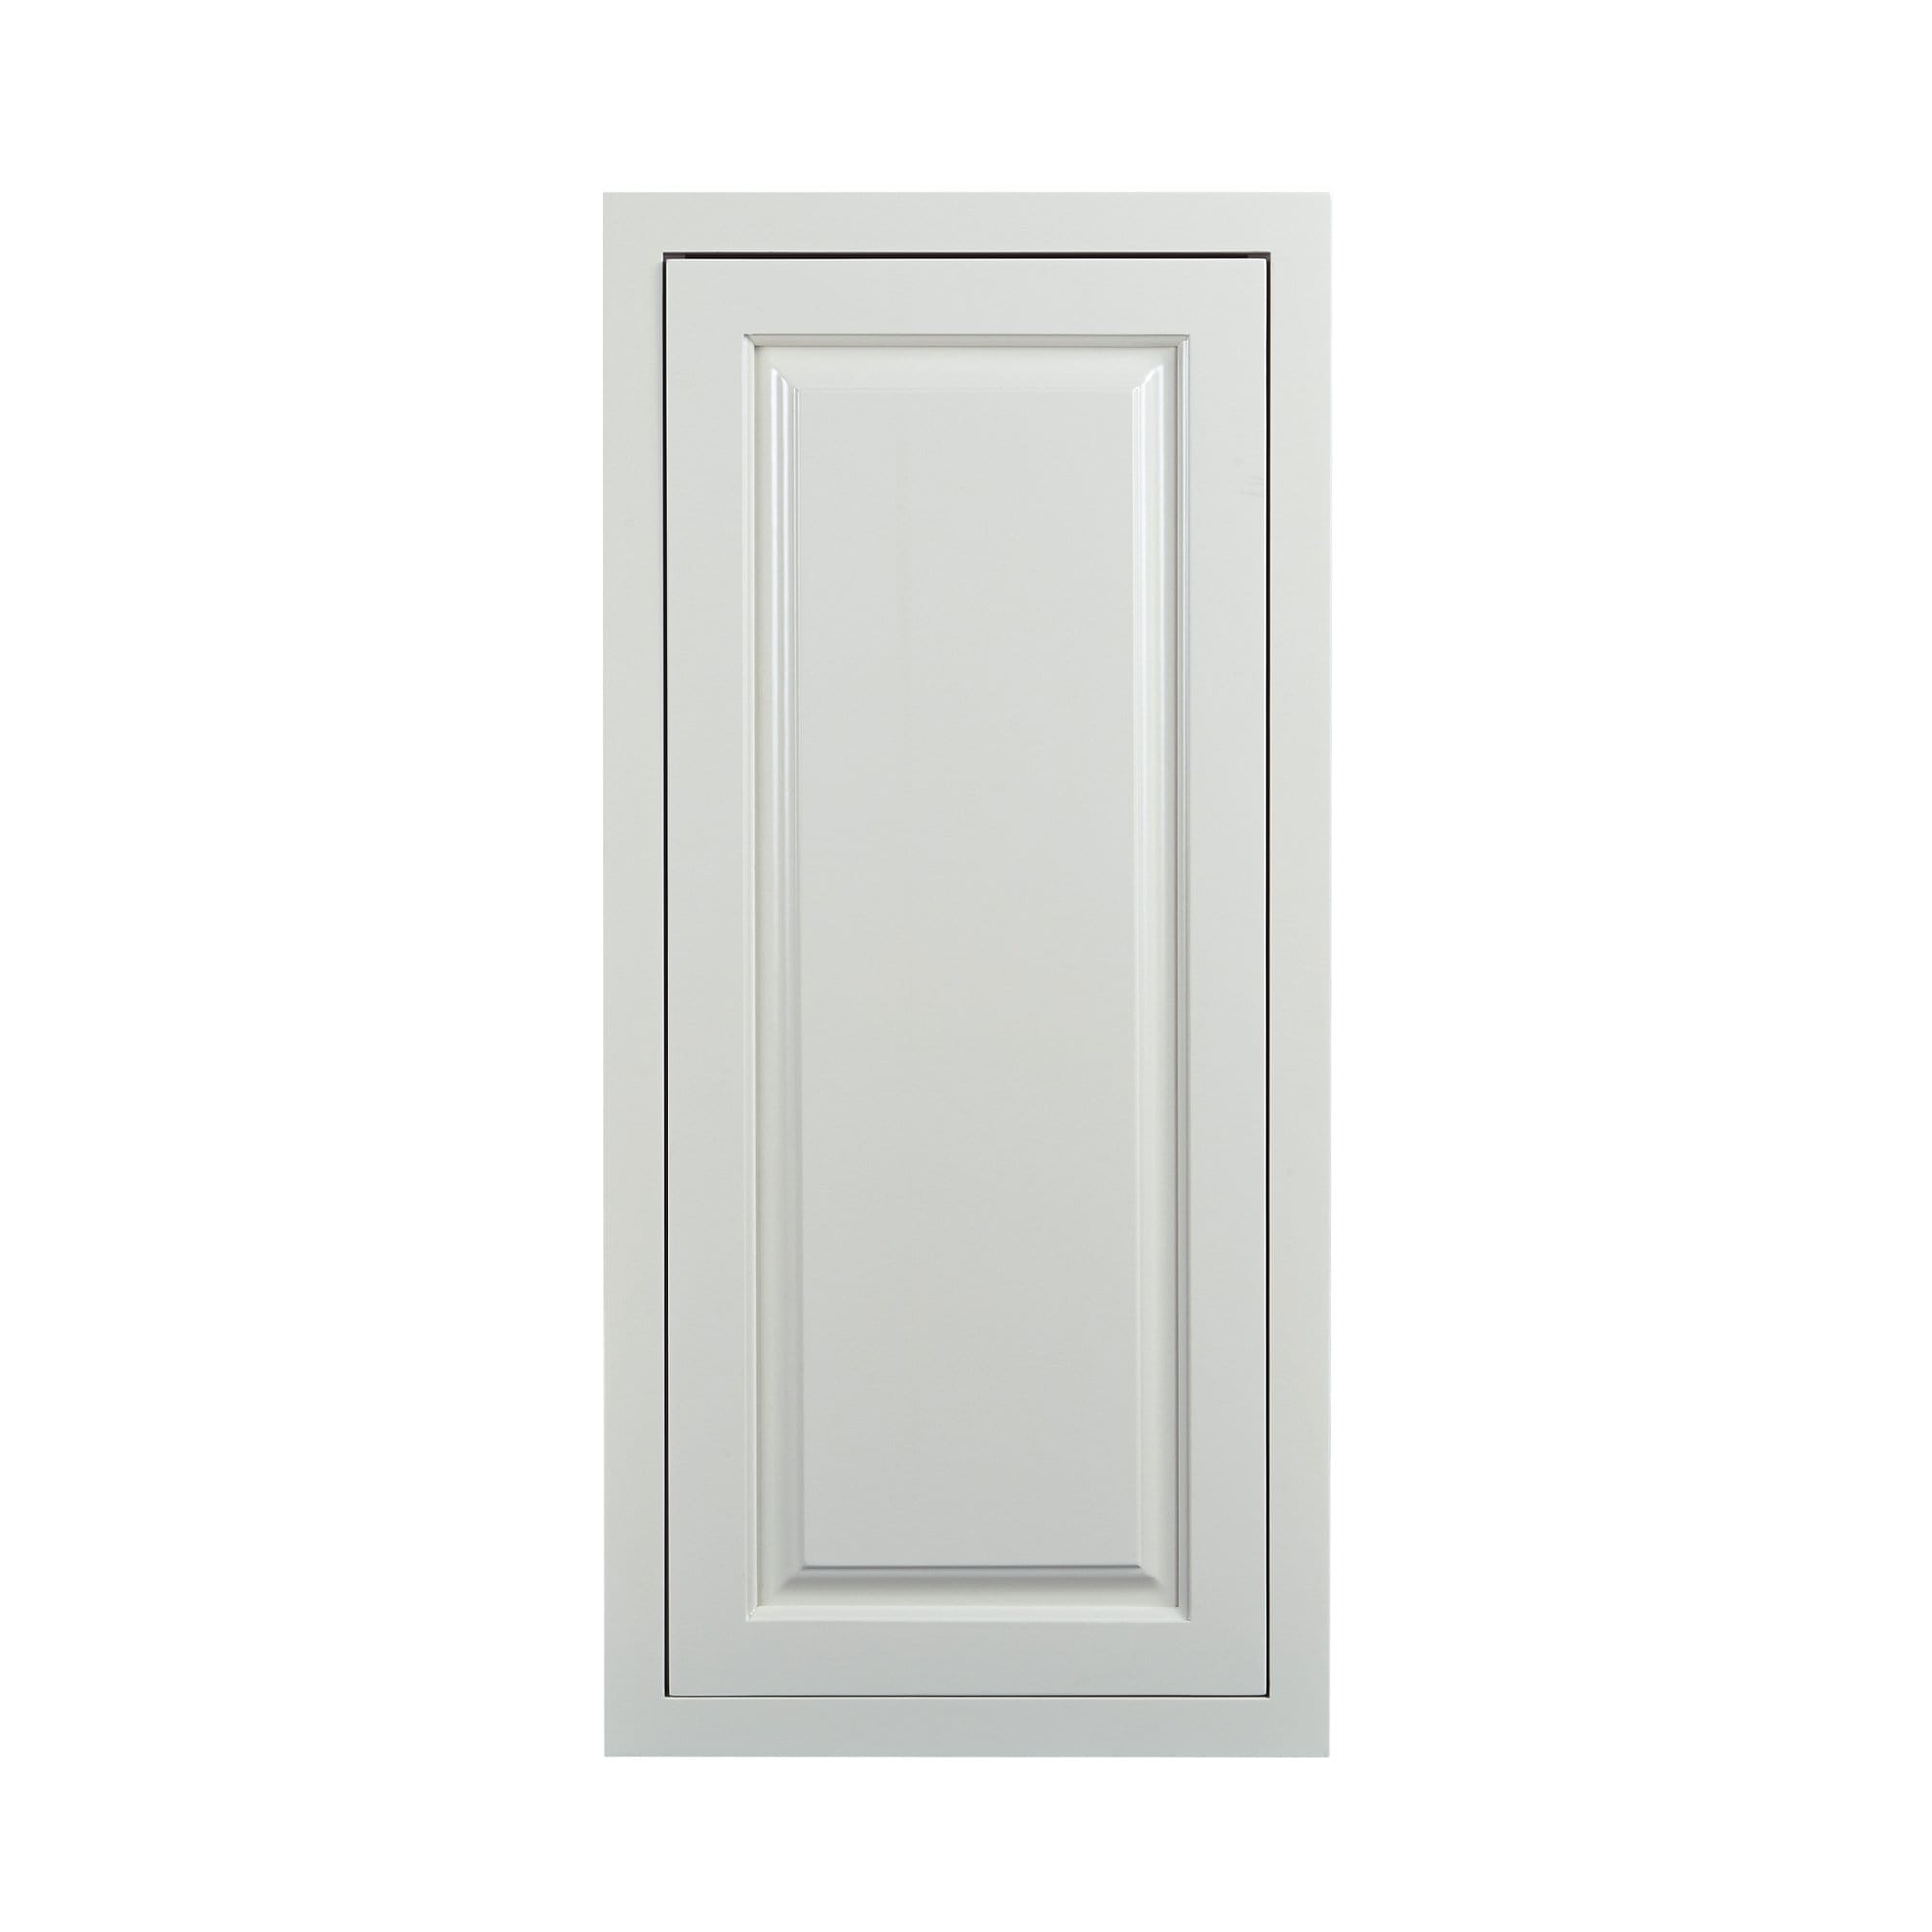 30" Tall Vintage White Inset Raised Panel Wall Cabinet - Single Door 9", 12", 15", 18" & 21"